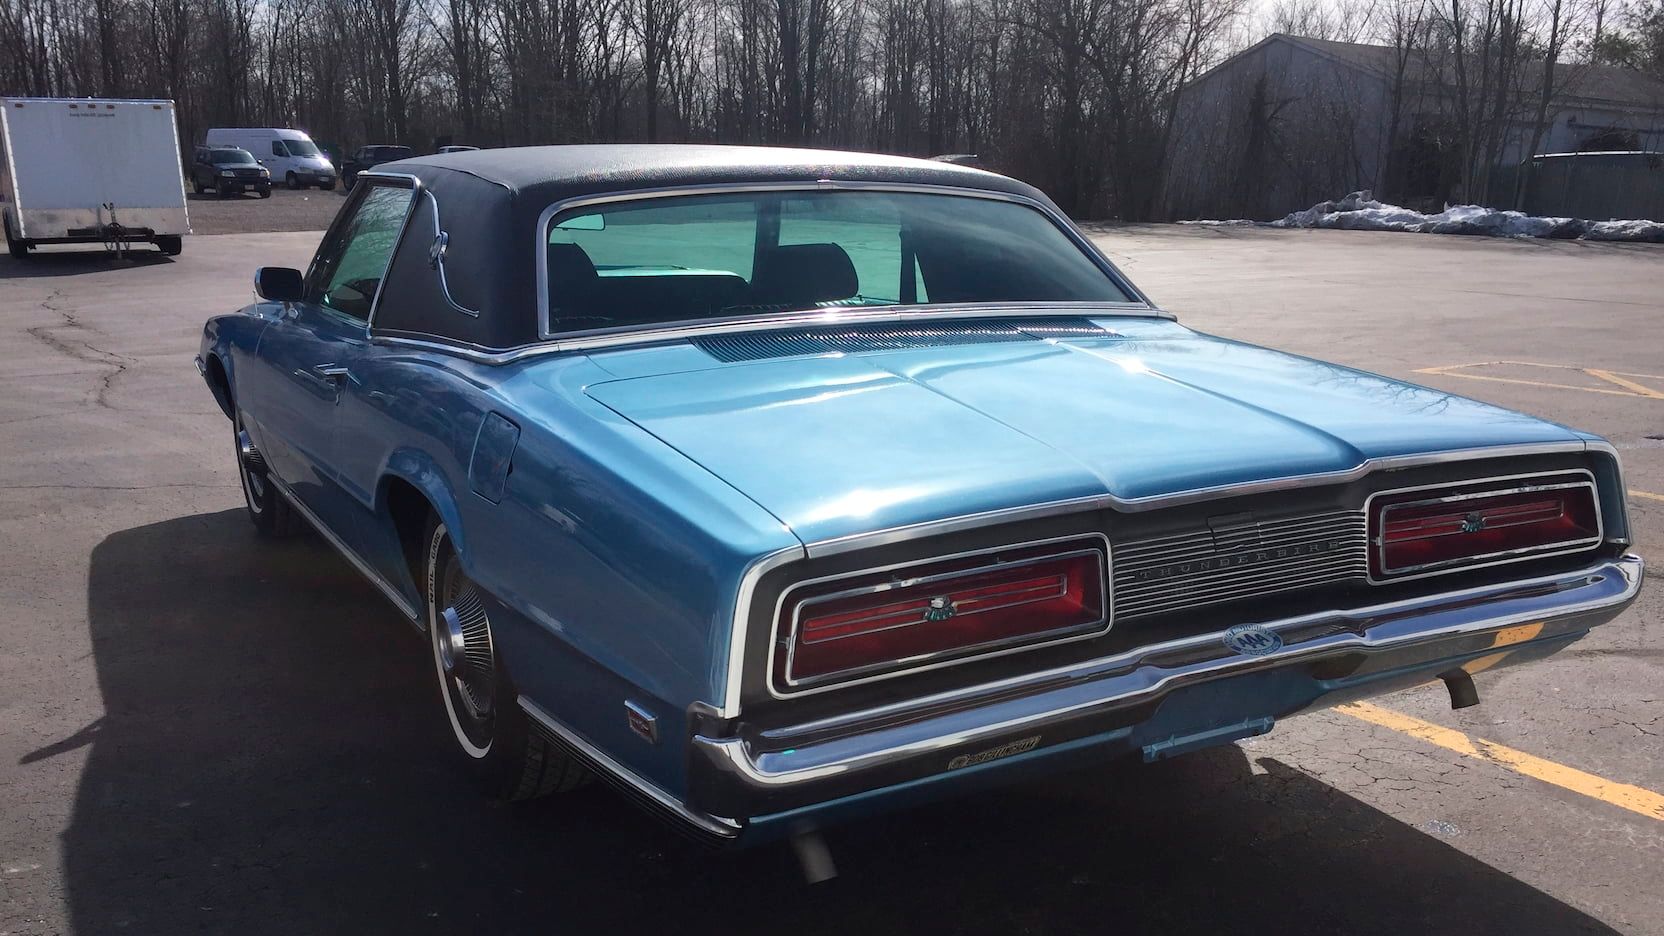 Blue 1969 Ford Thunderbird parked